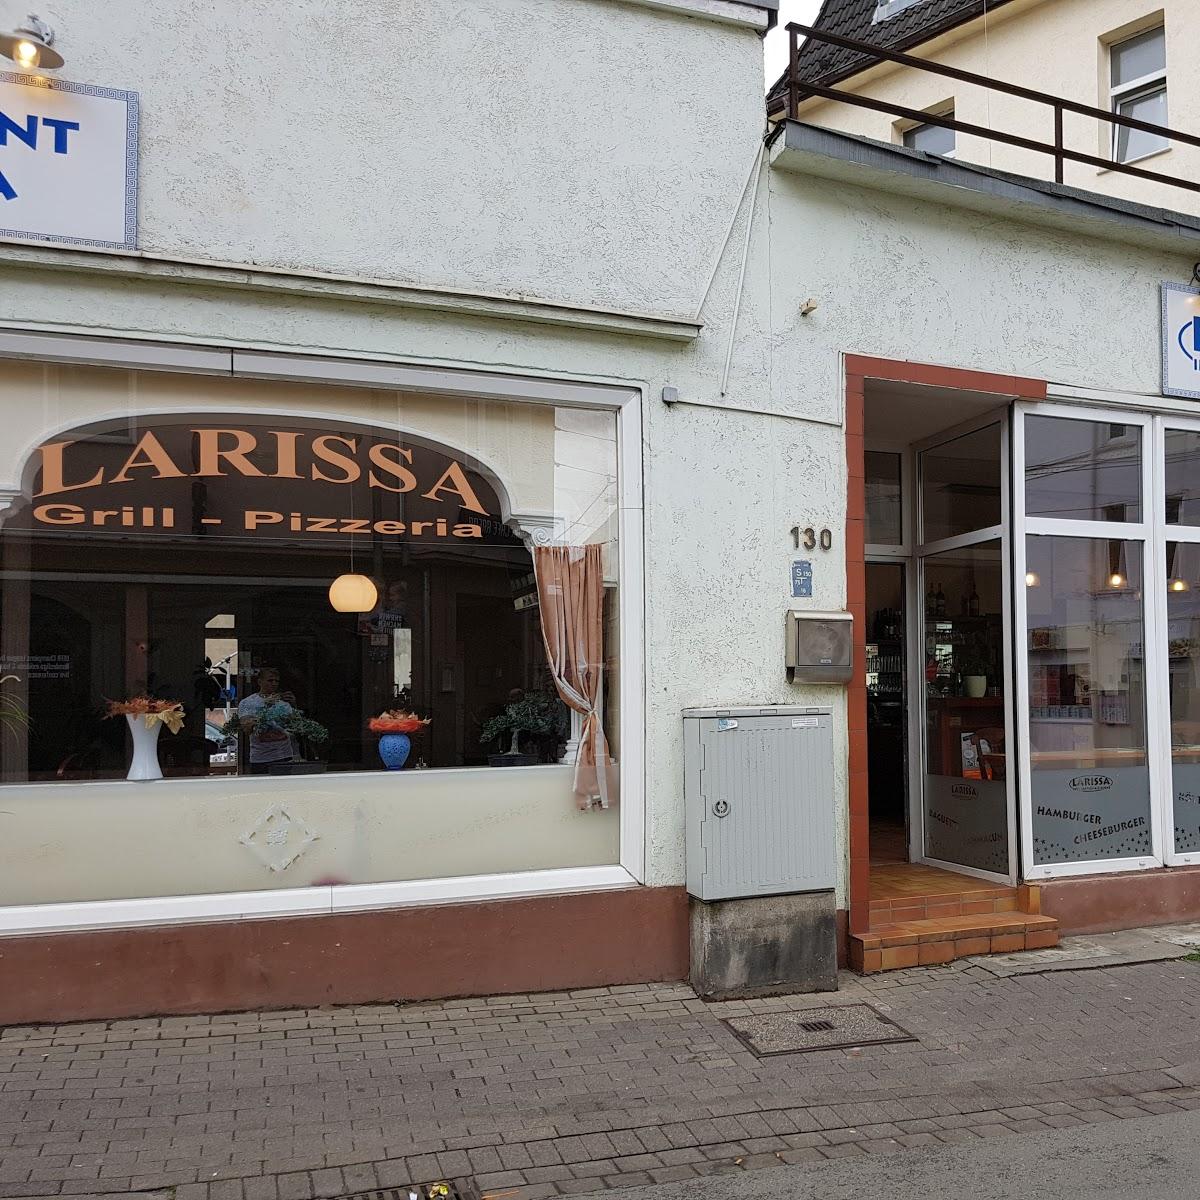 Restaurant "Larissa" in Bielefeld